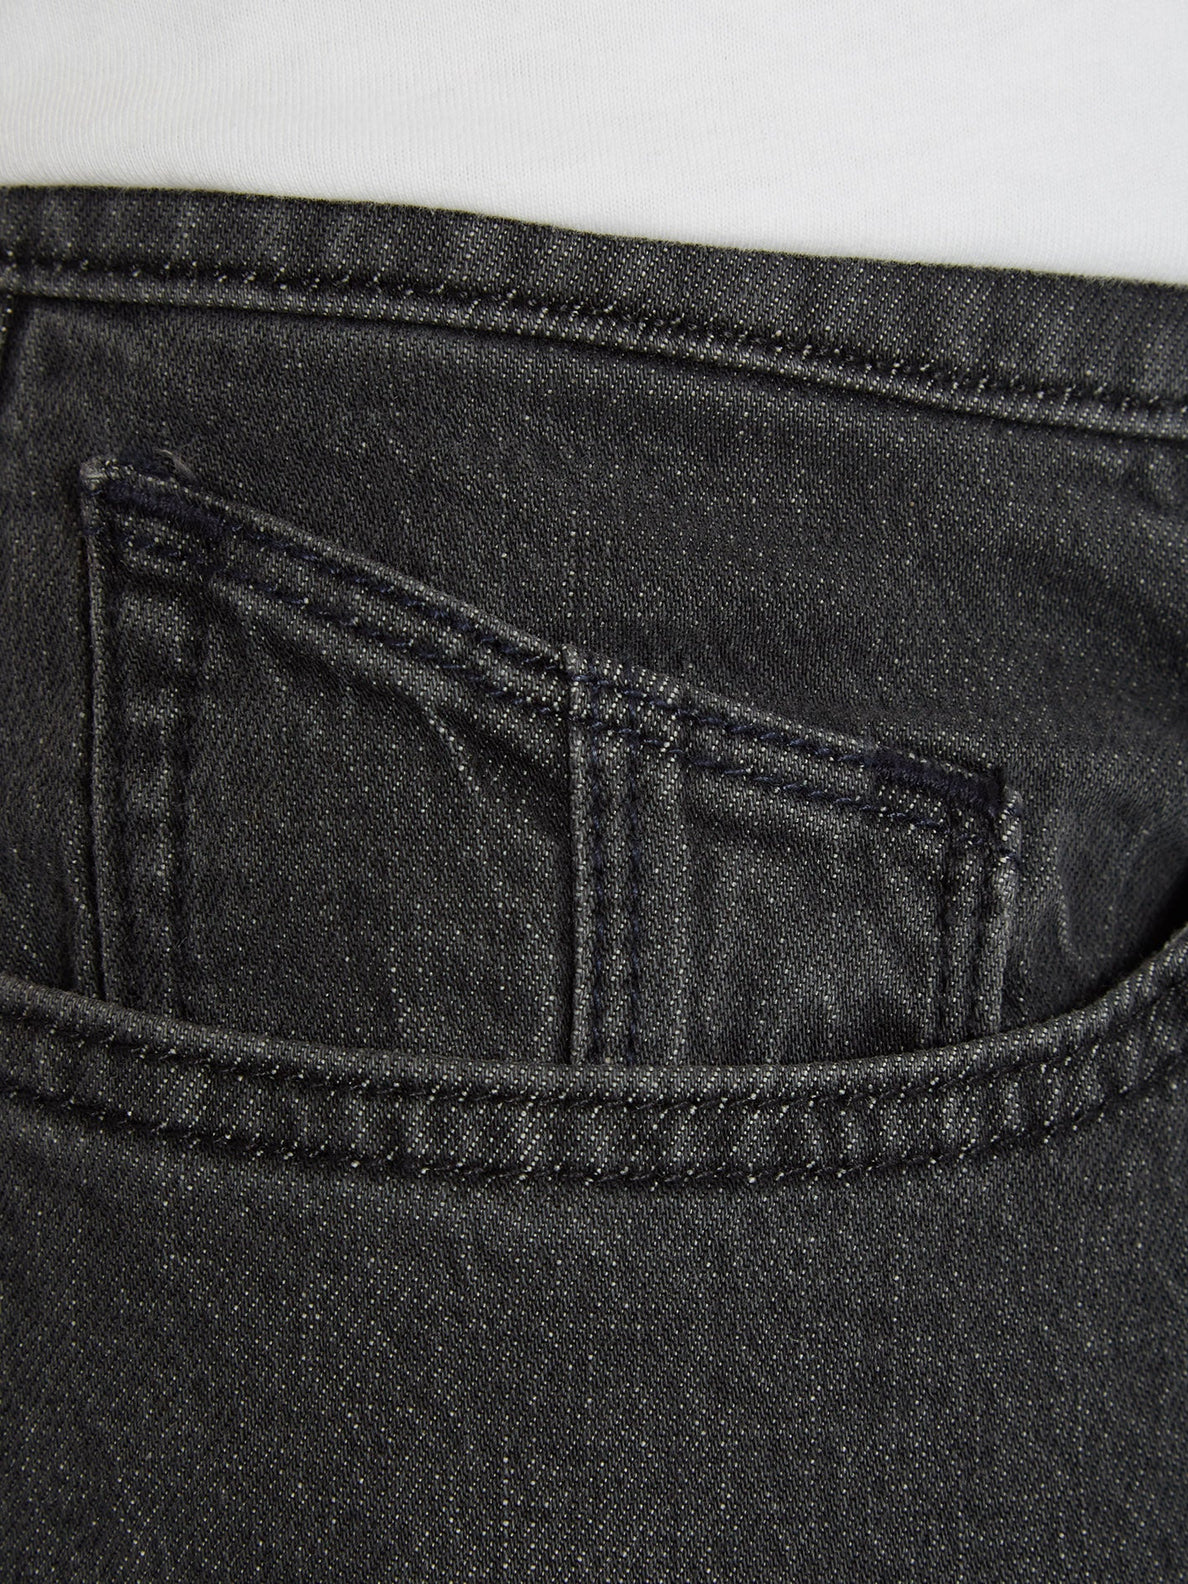 Volcom Solver Tapered Denim Jeans – Stoney Black